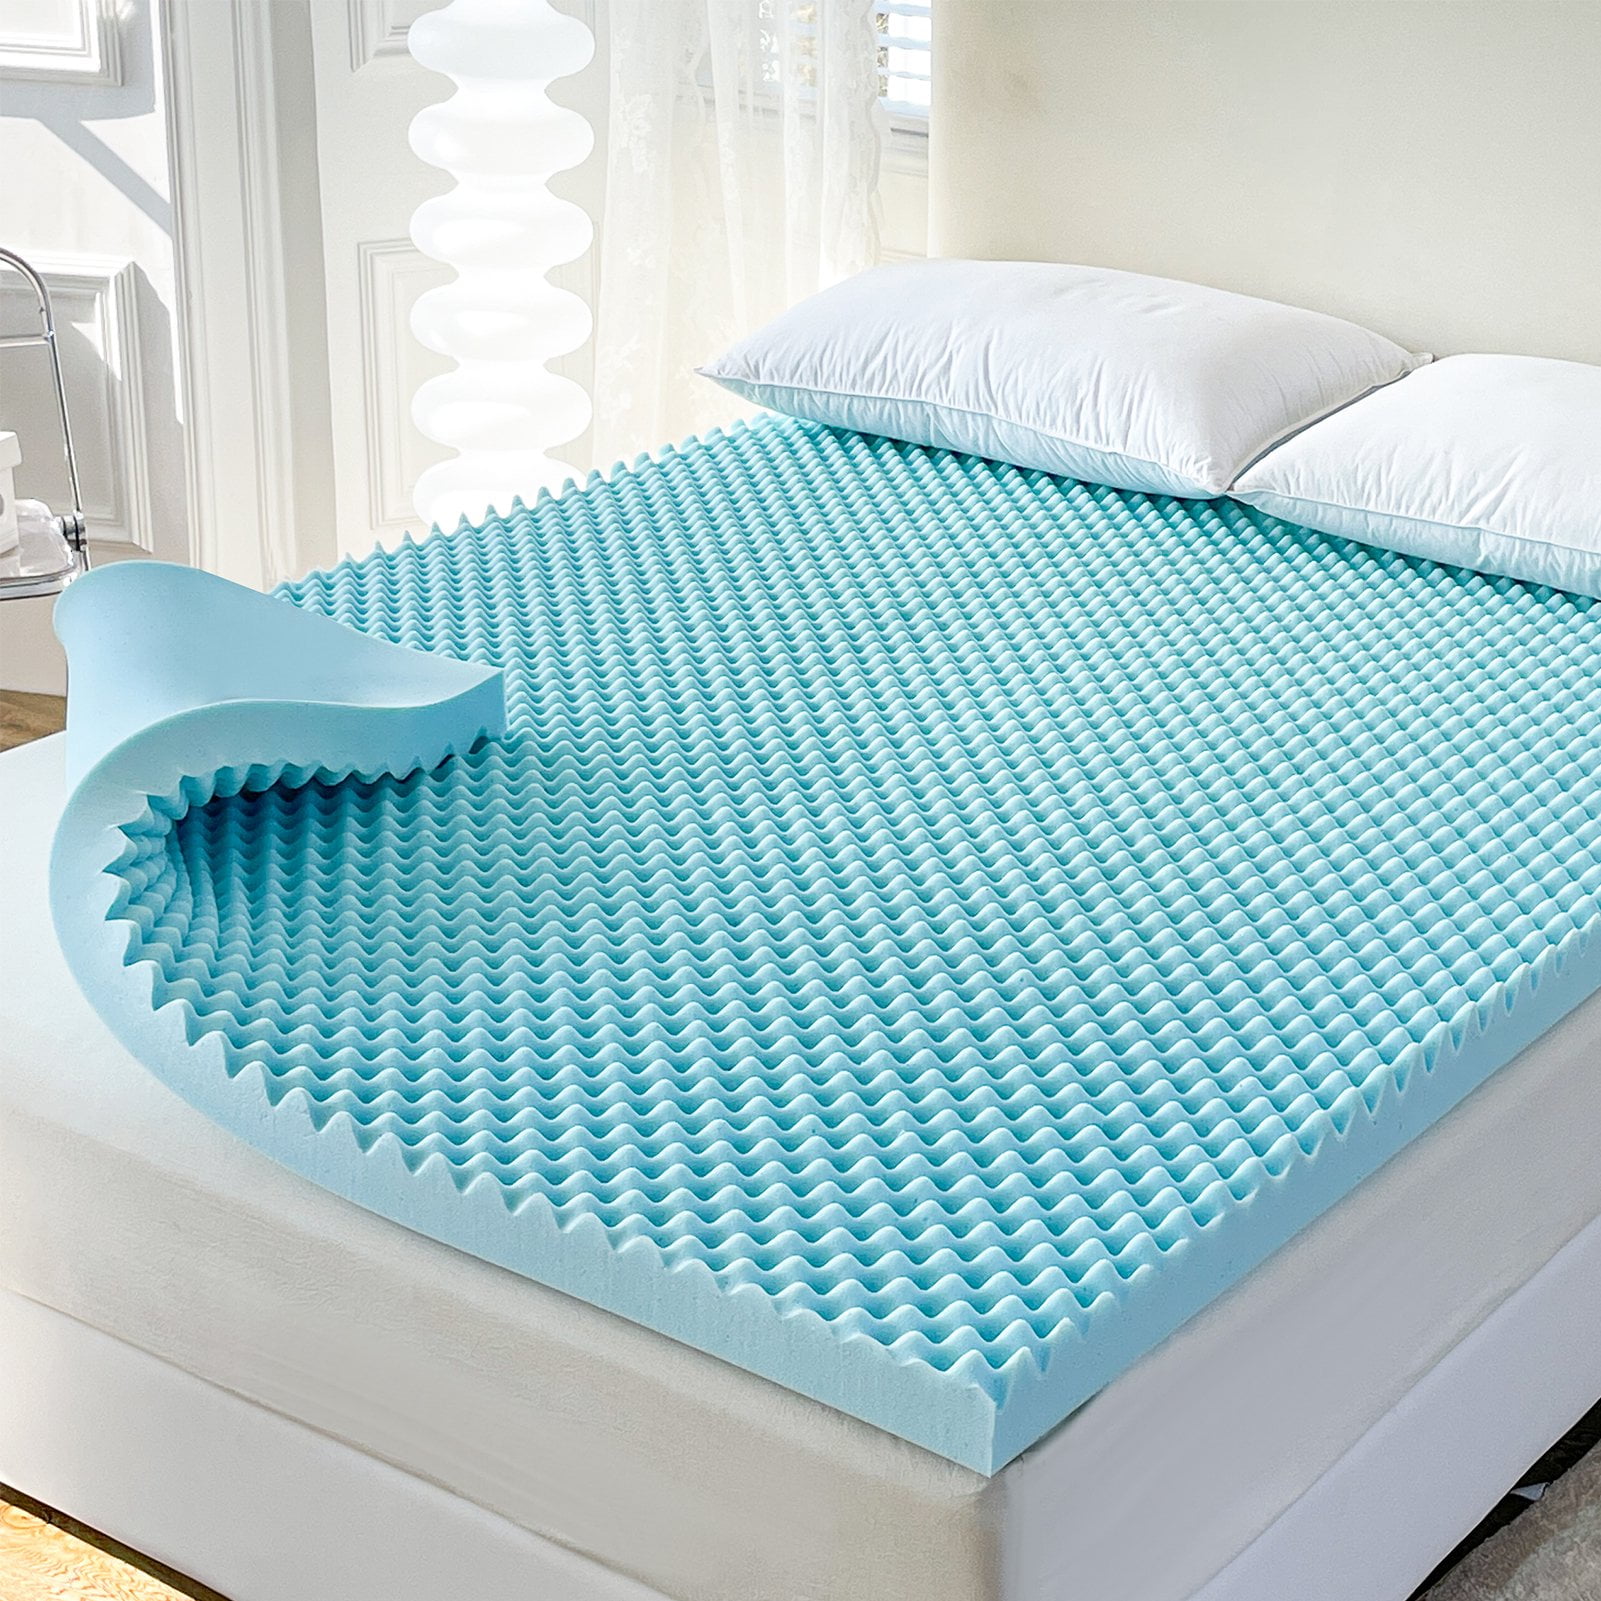 Alwyn Home Twin XL Egg Crate Foam Mattress Topper - Bed Pad for